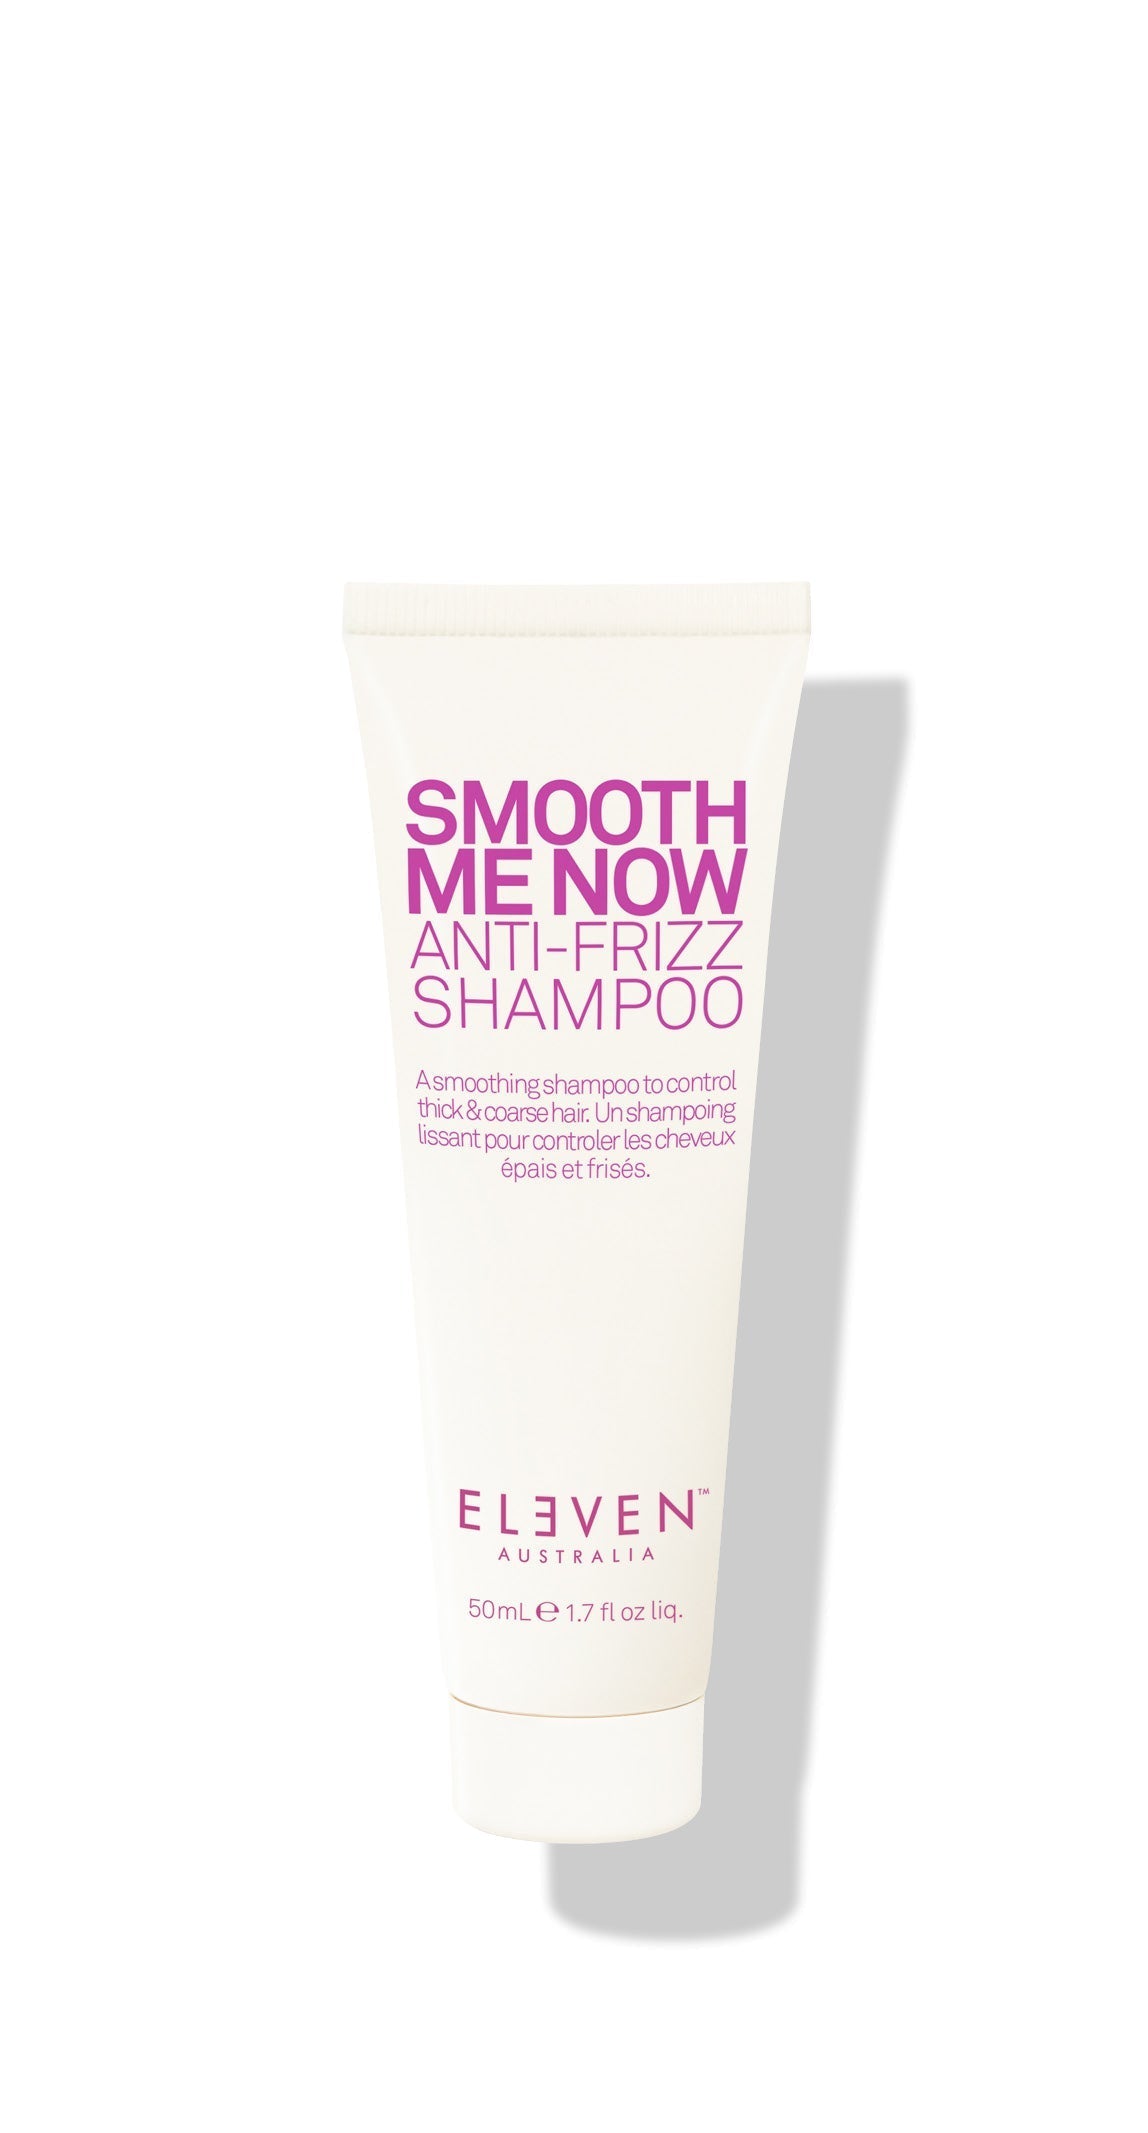 Smooth Me Now Anti-Frizz Shampoo - 50ml - ELEVEN Australia